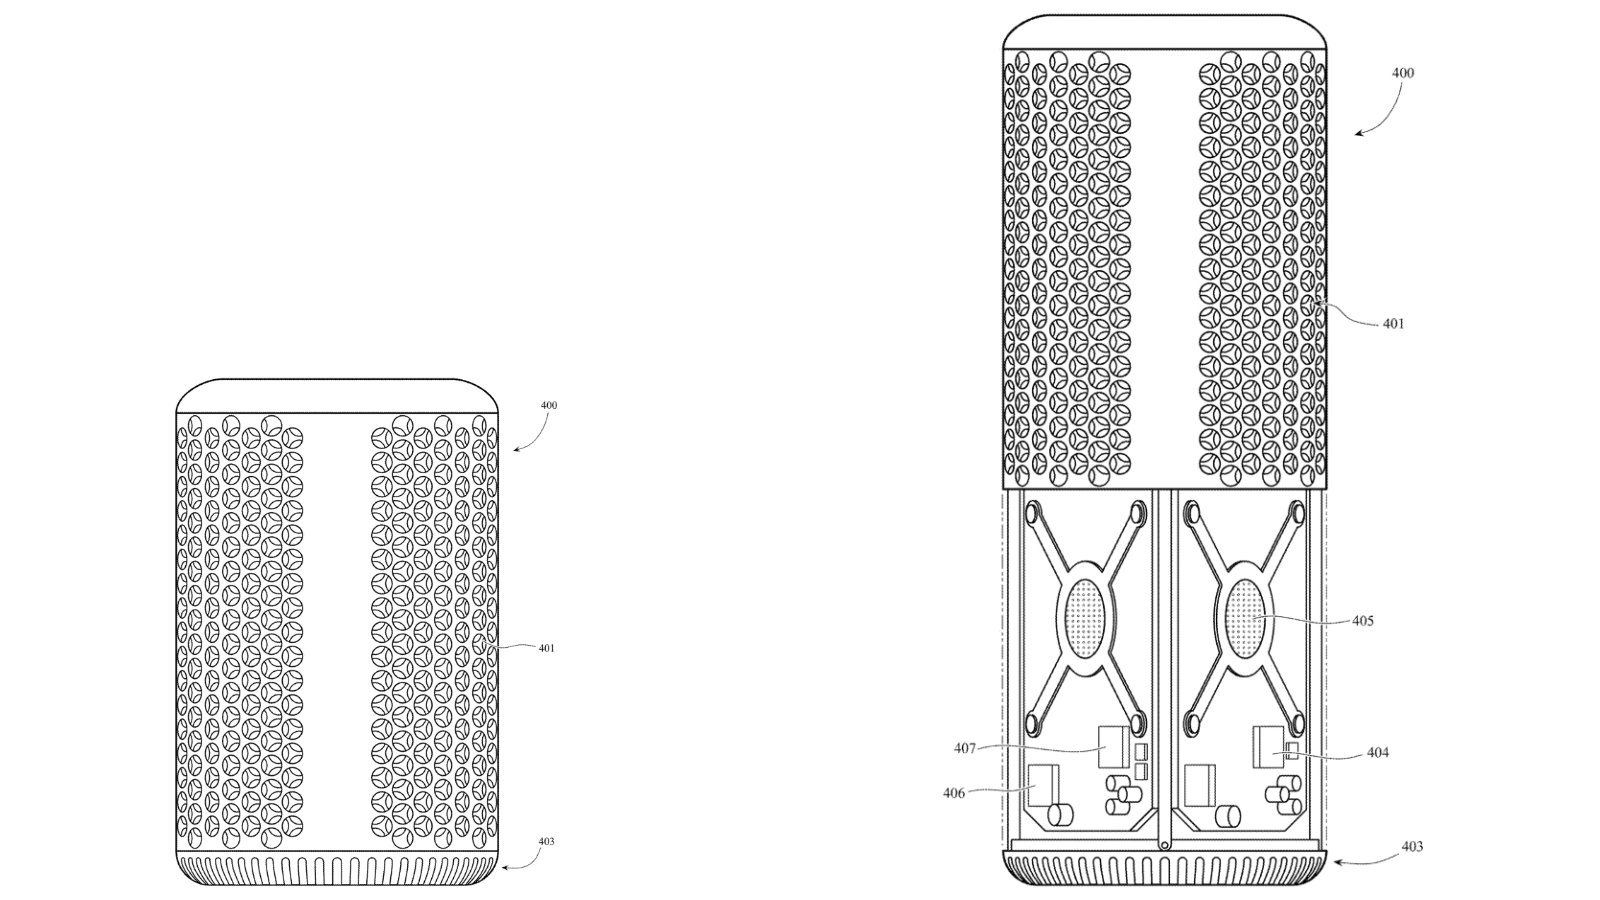 https://images.macrumors.com/article-new/2021/03/iphone-lattice-pattern-patent-trashcan.jpg